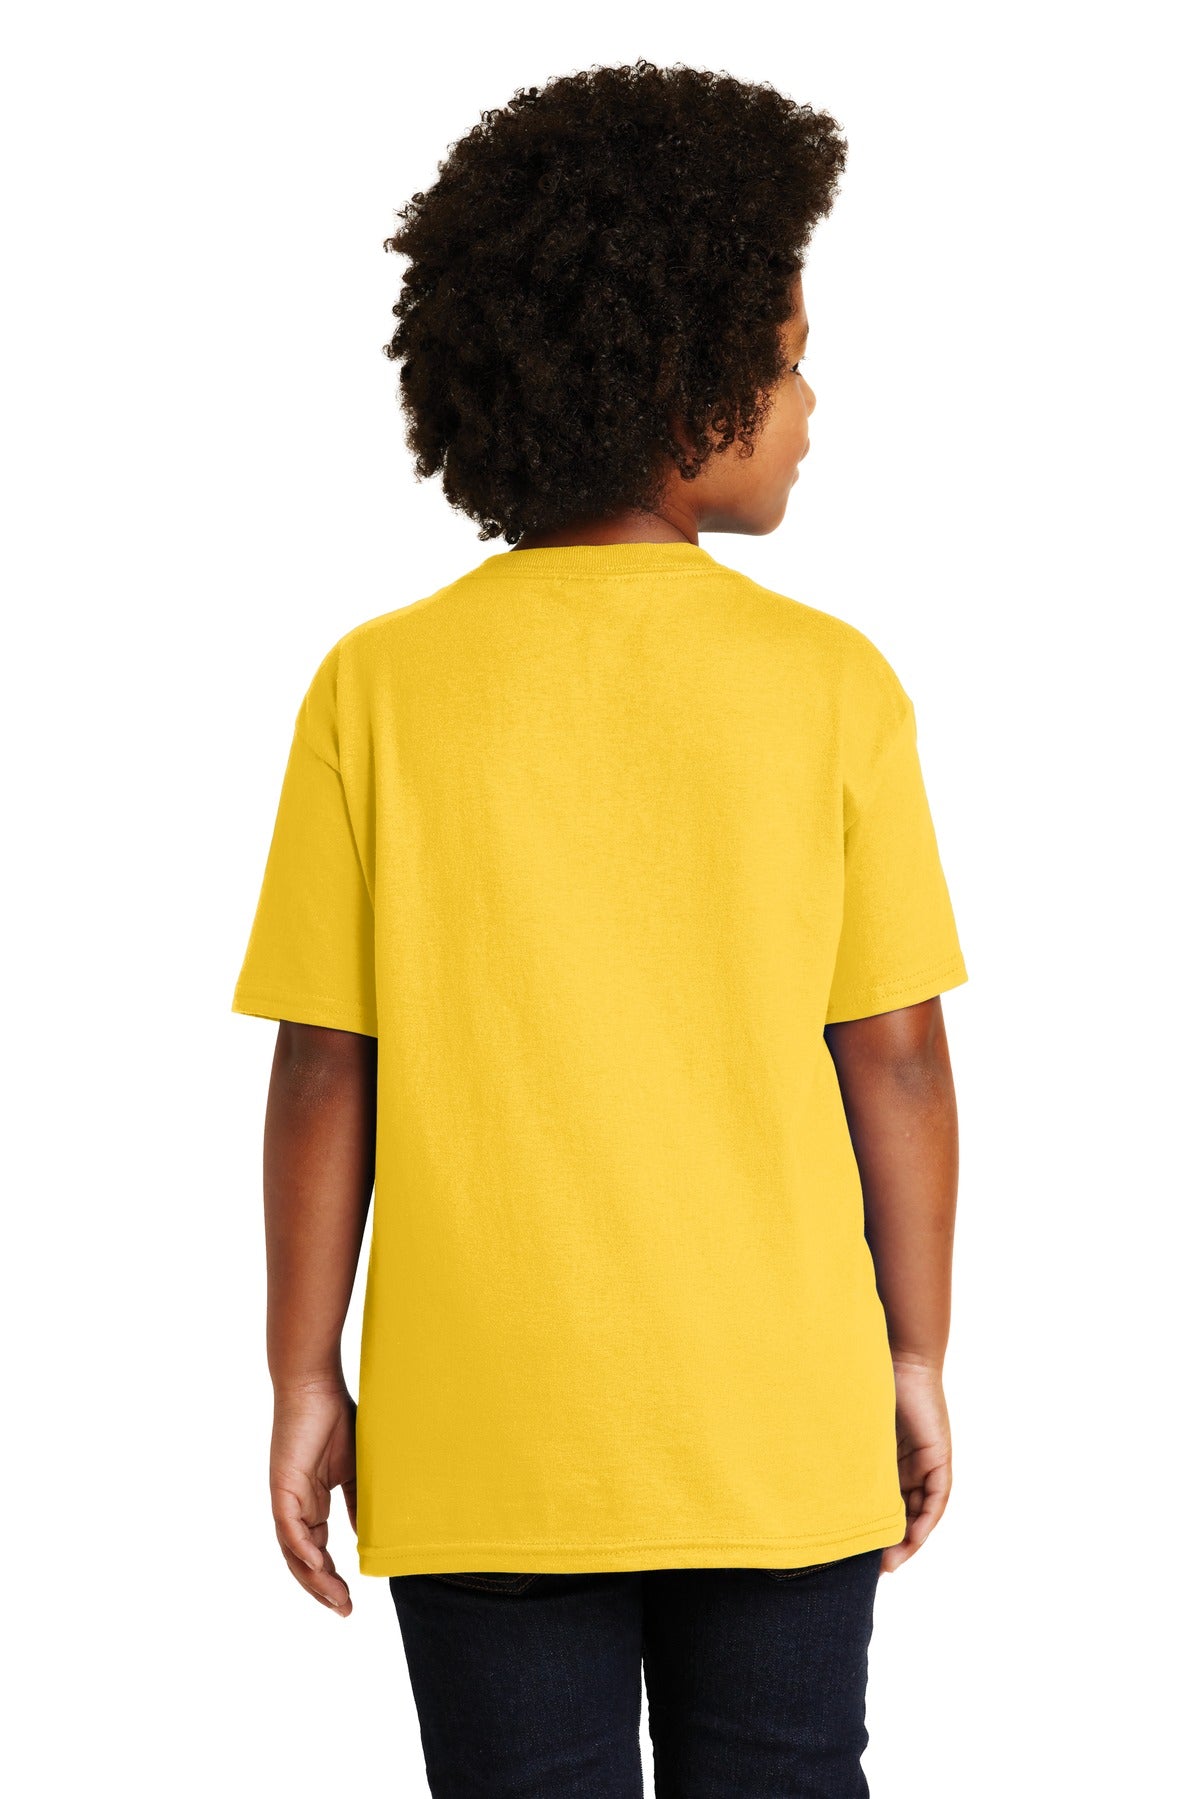 Gildan® - Youth Ultra Cotton®100% US Cotton T-Shirt. 2000B [Daisy] - DFW Impression